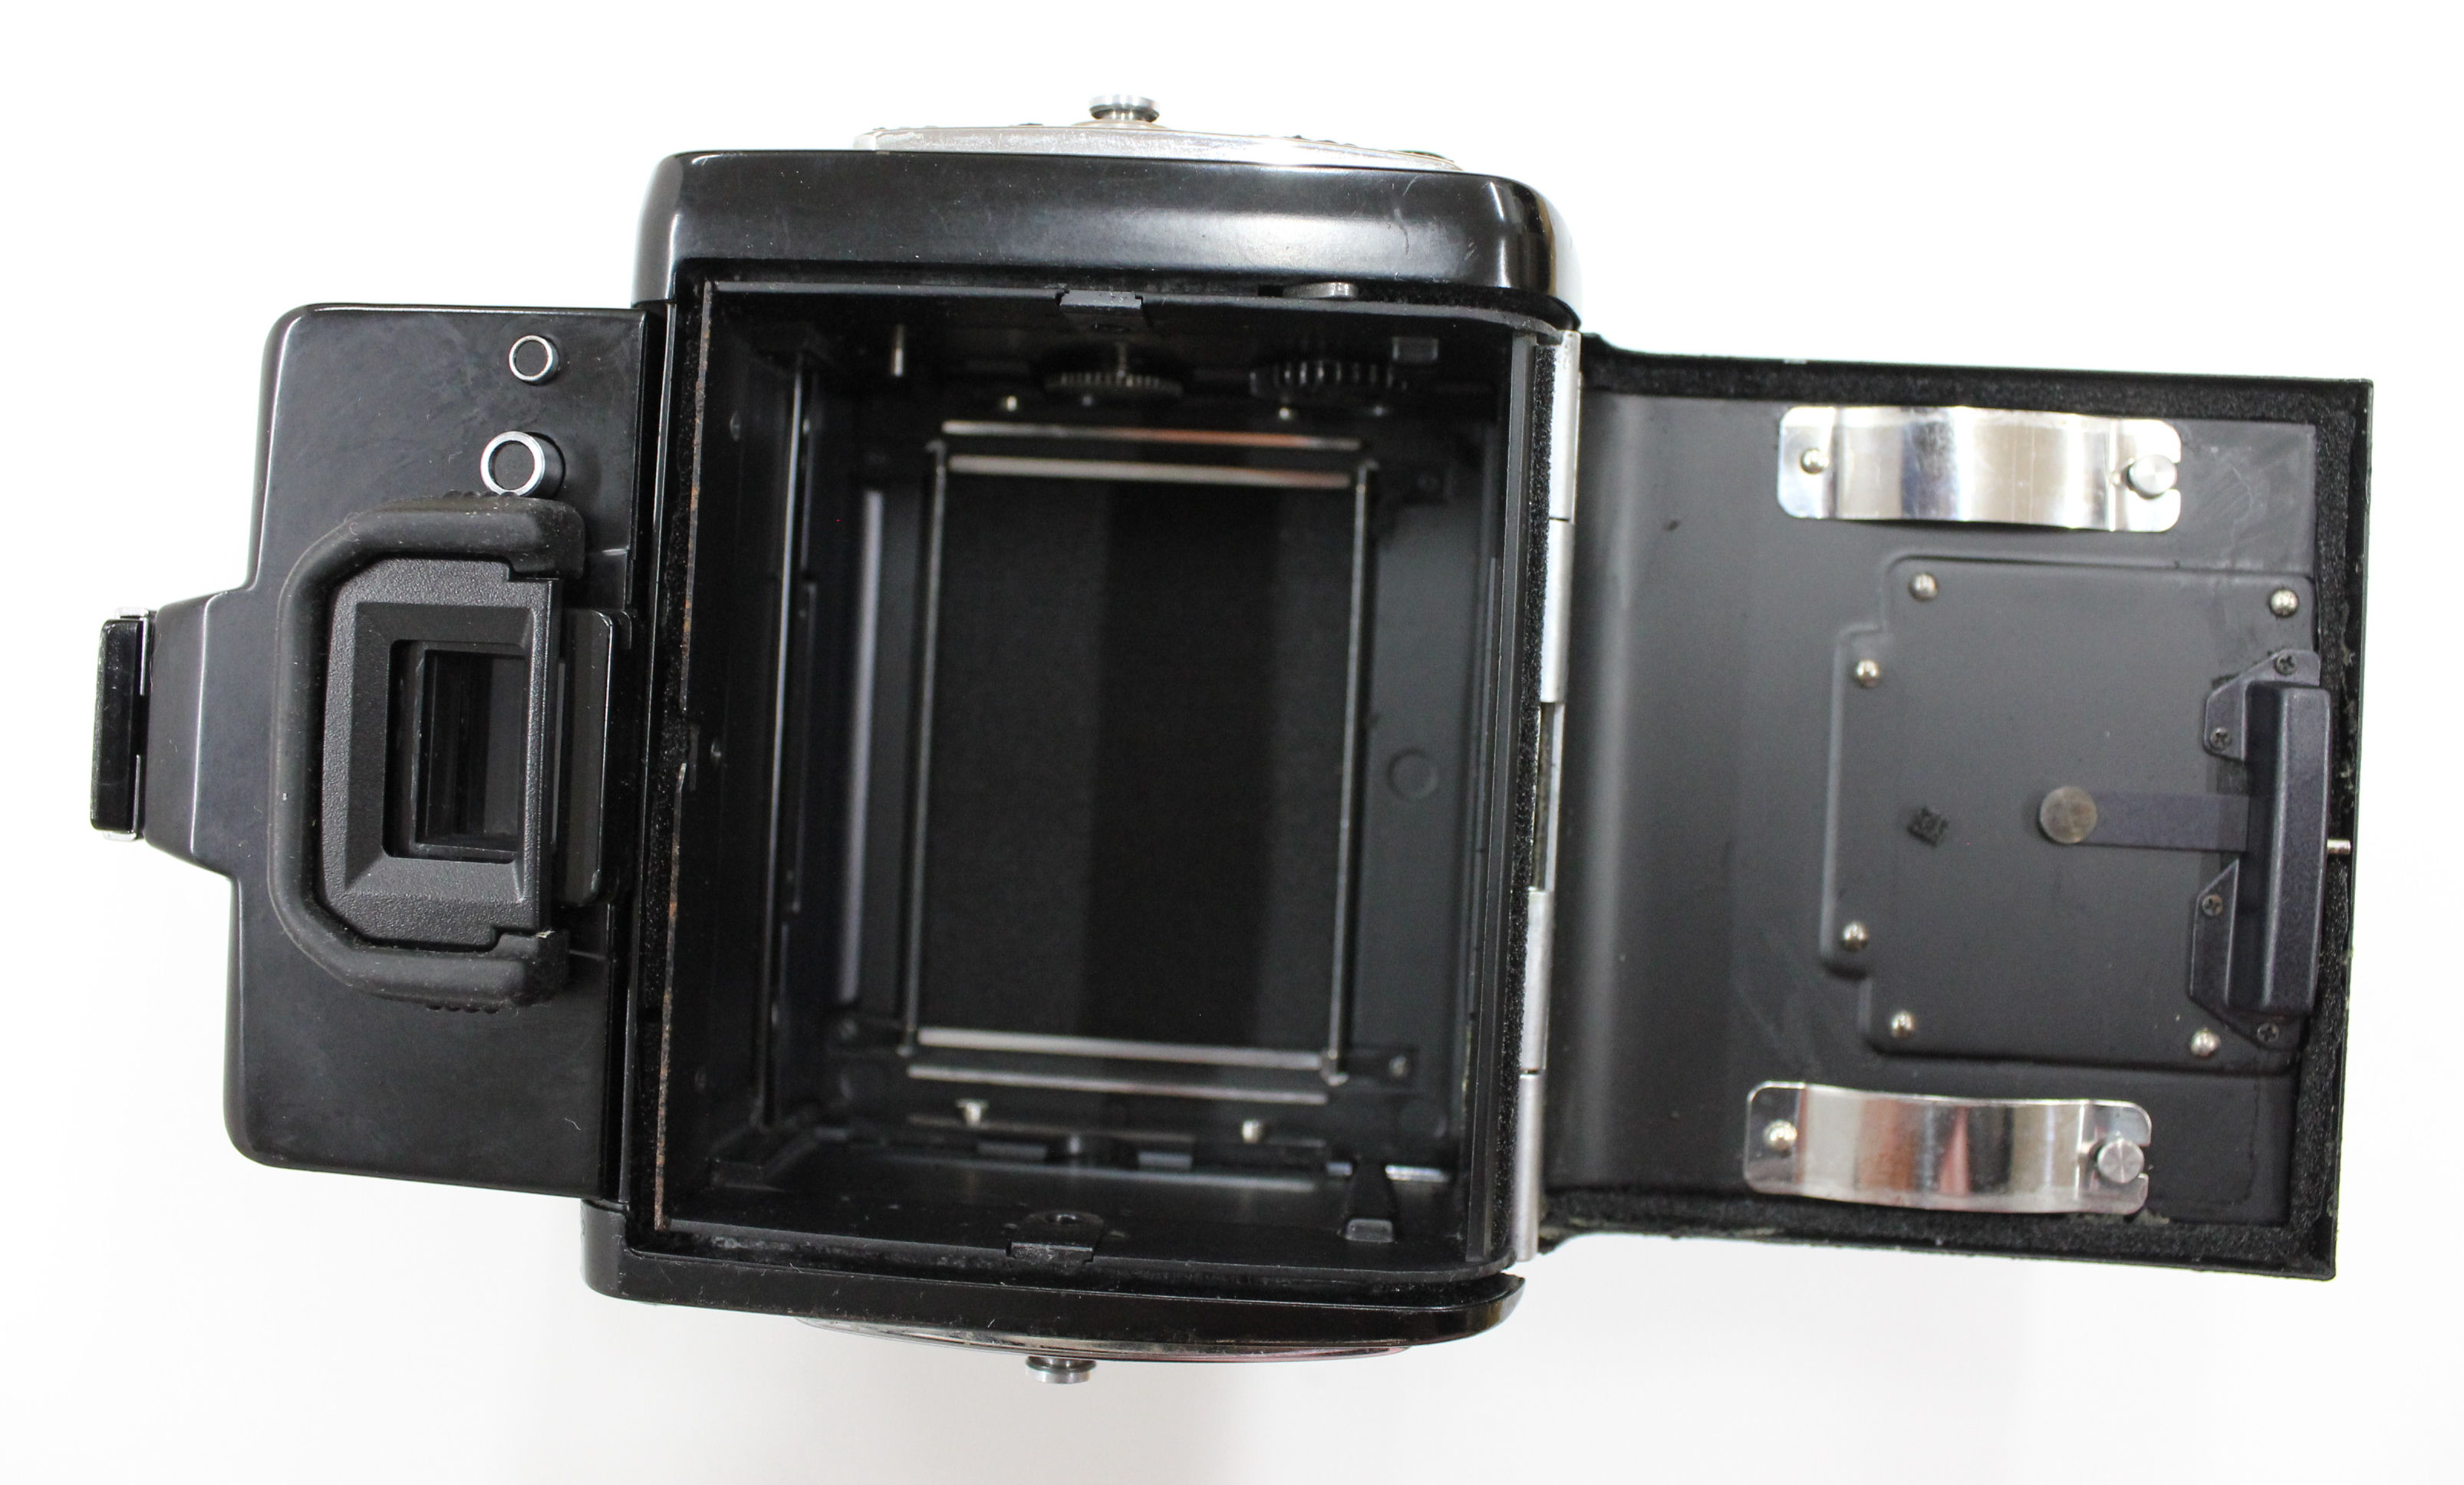  Mamiya M645 1000S Medium Format Film Camera Body from Japan Photo 6